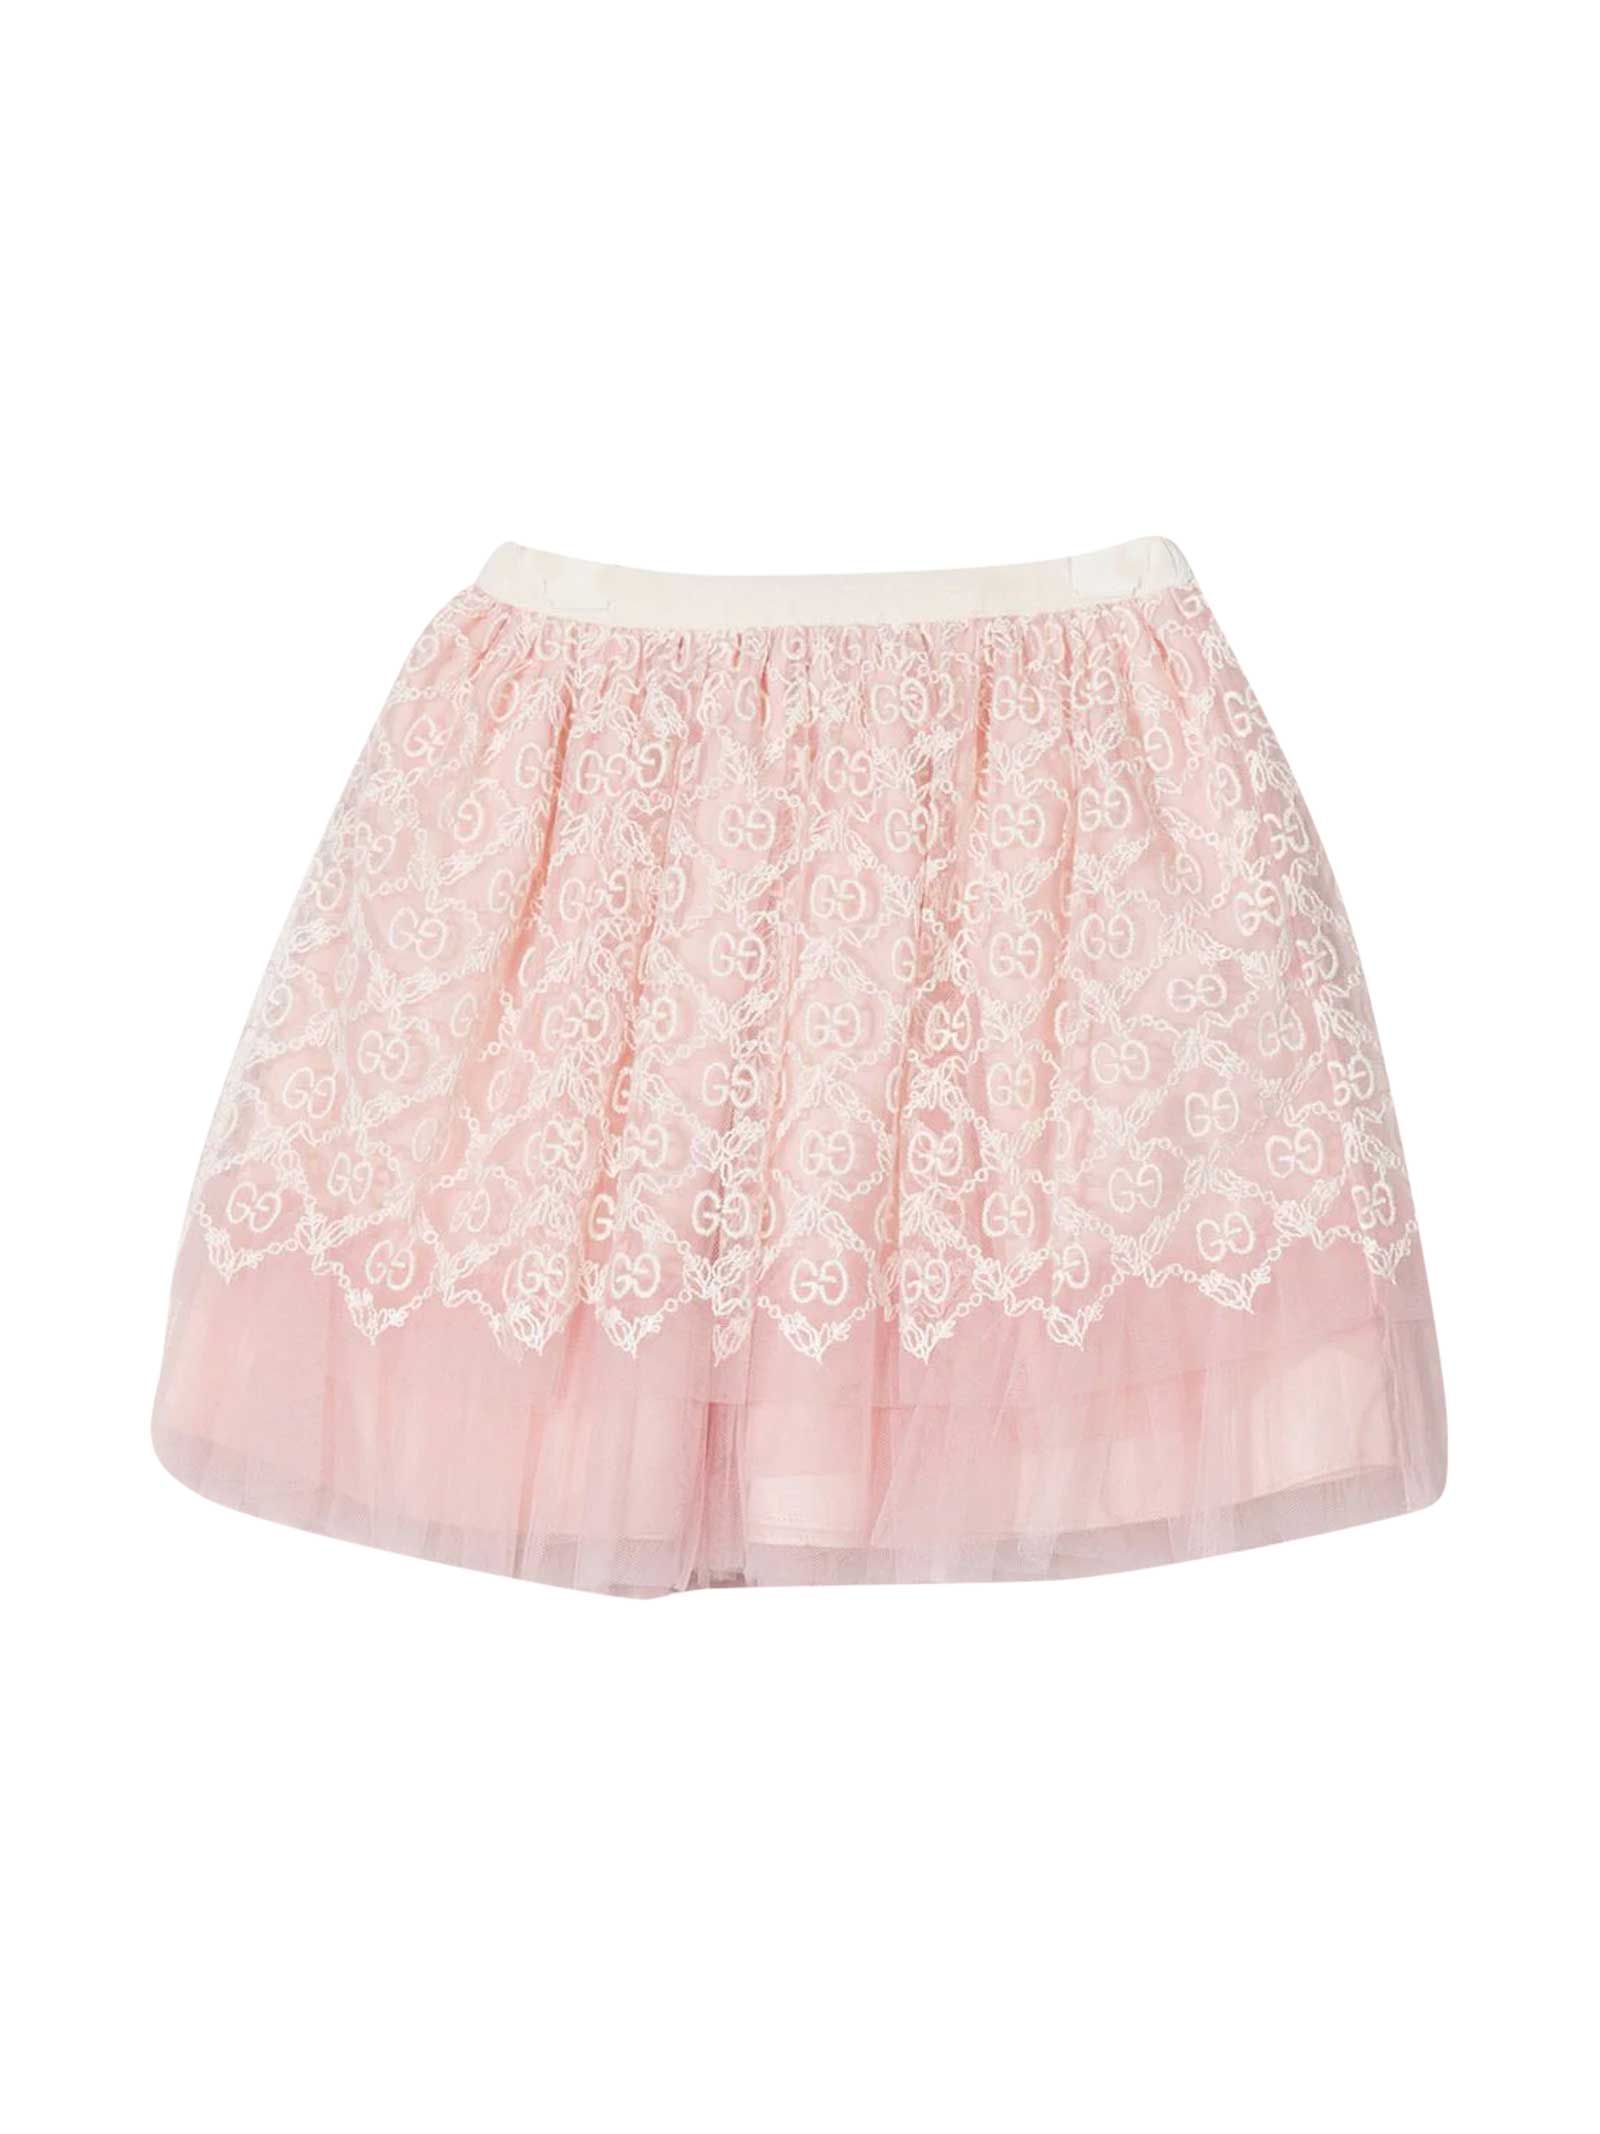 Gucci Pink Skirt